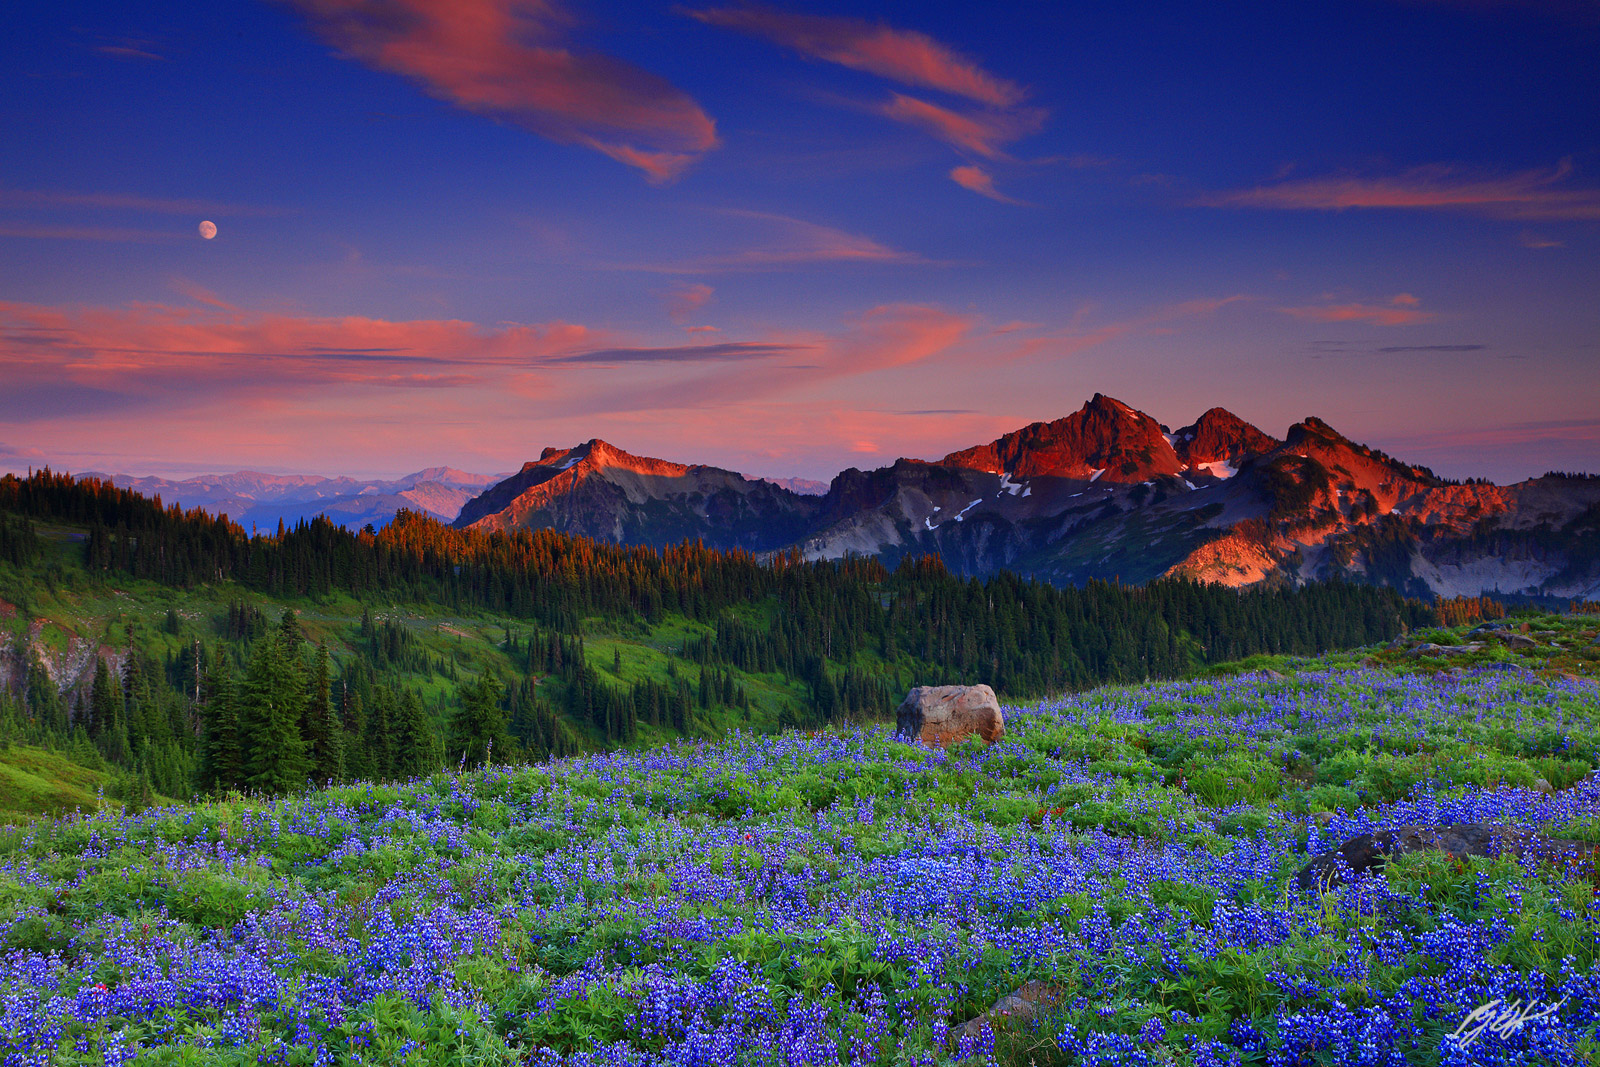 Sunset Wildflowers and the Tatoosh Range from Mt Rainier National Park in Washington